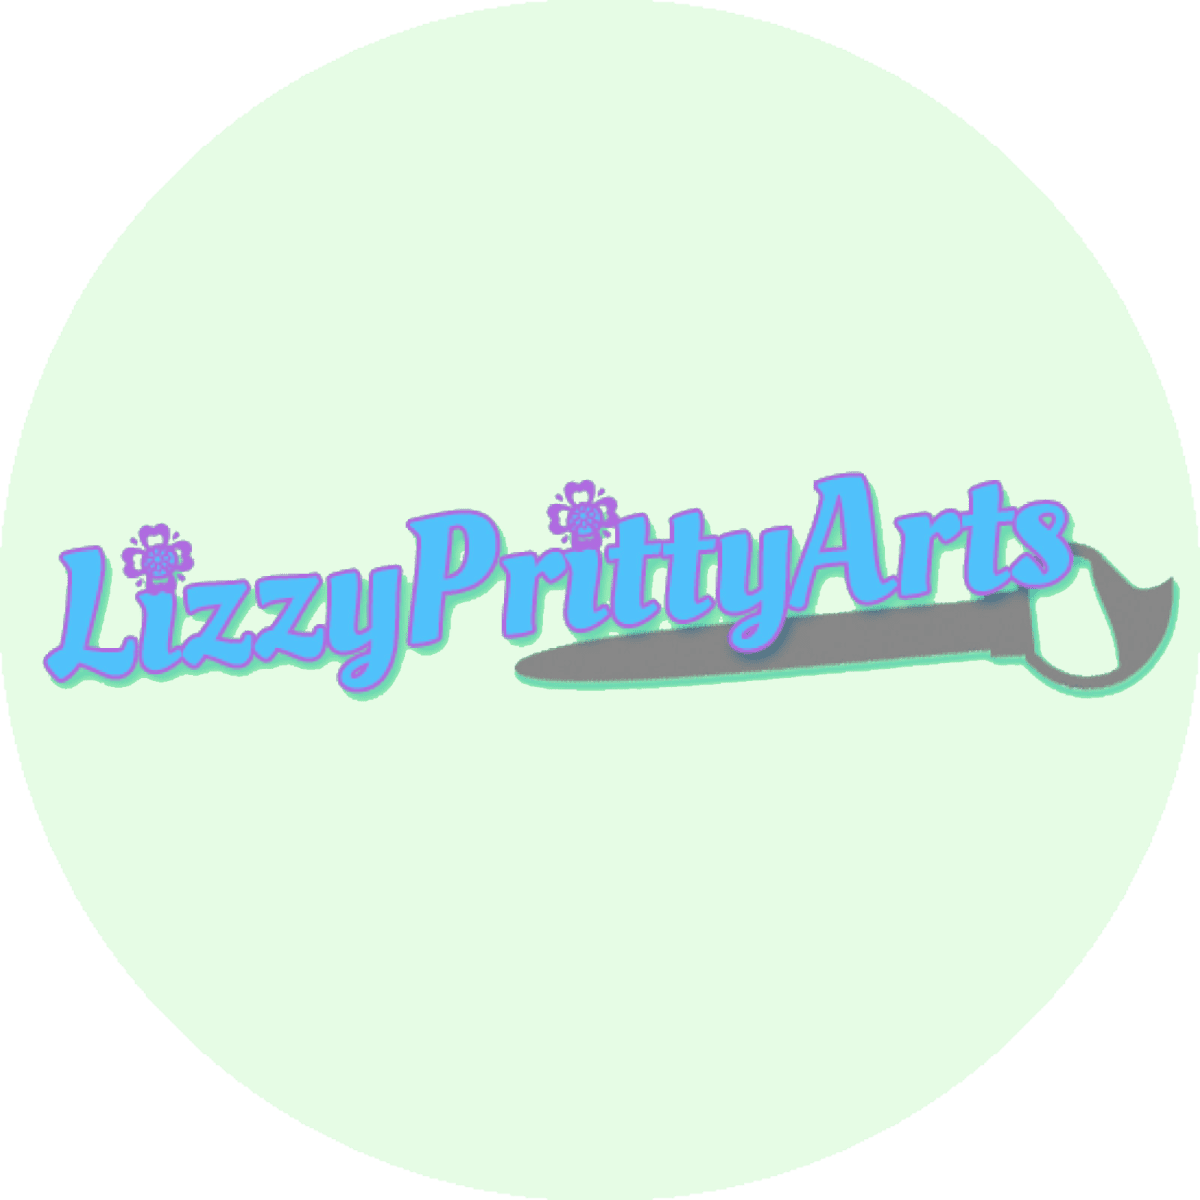 LizzyPrittyArts Logo Image - Large Image - Artist, Writer, And Graphic Designer